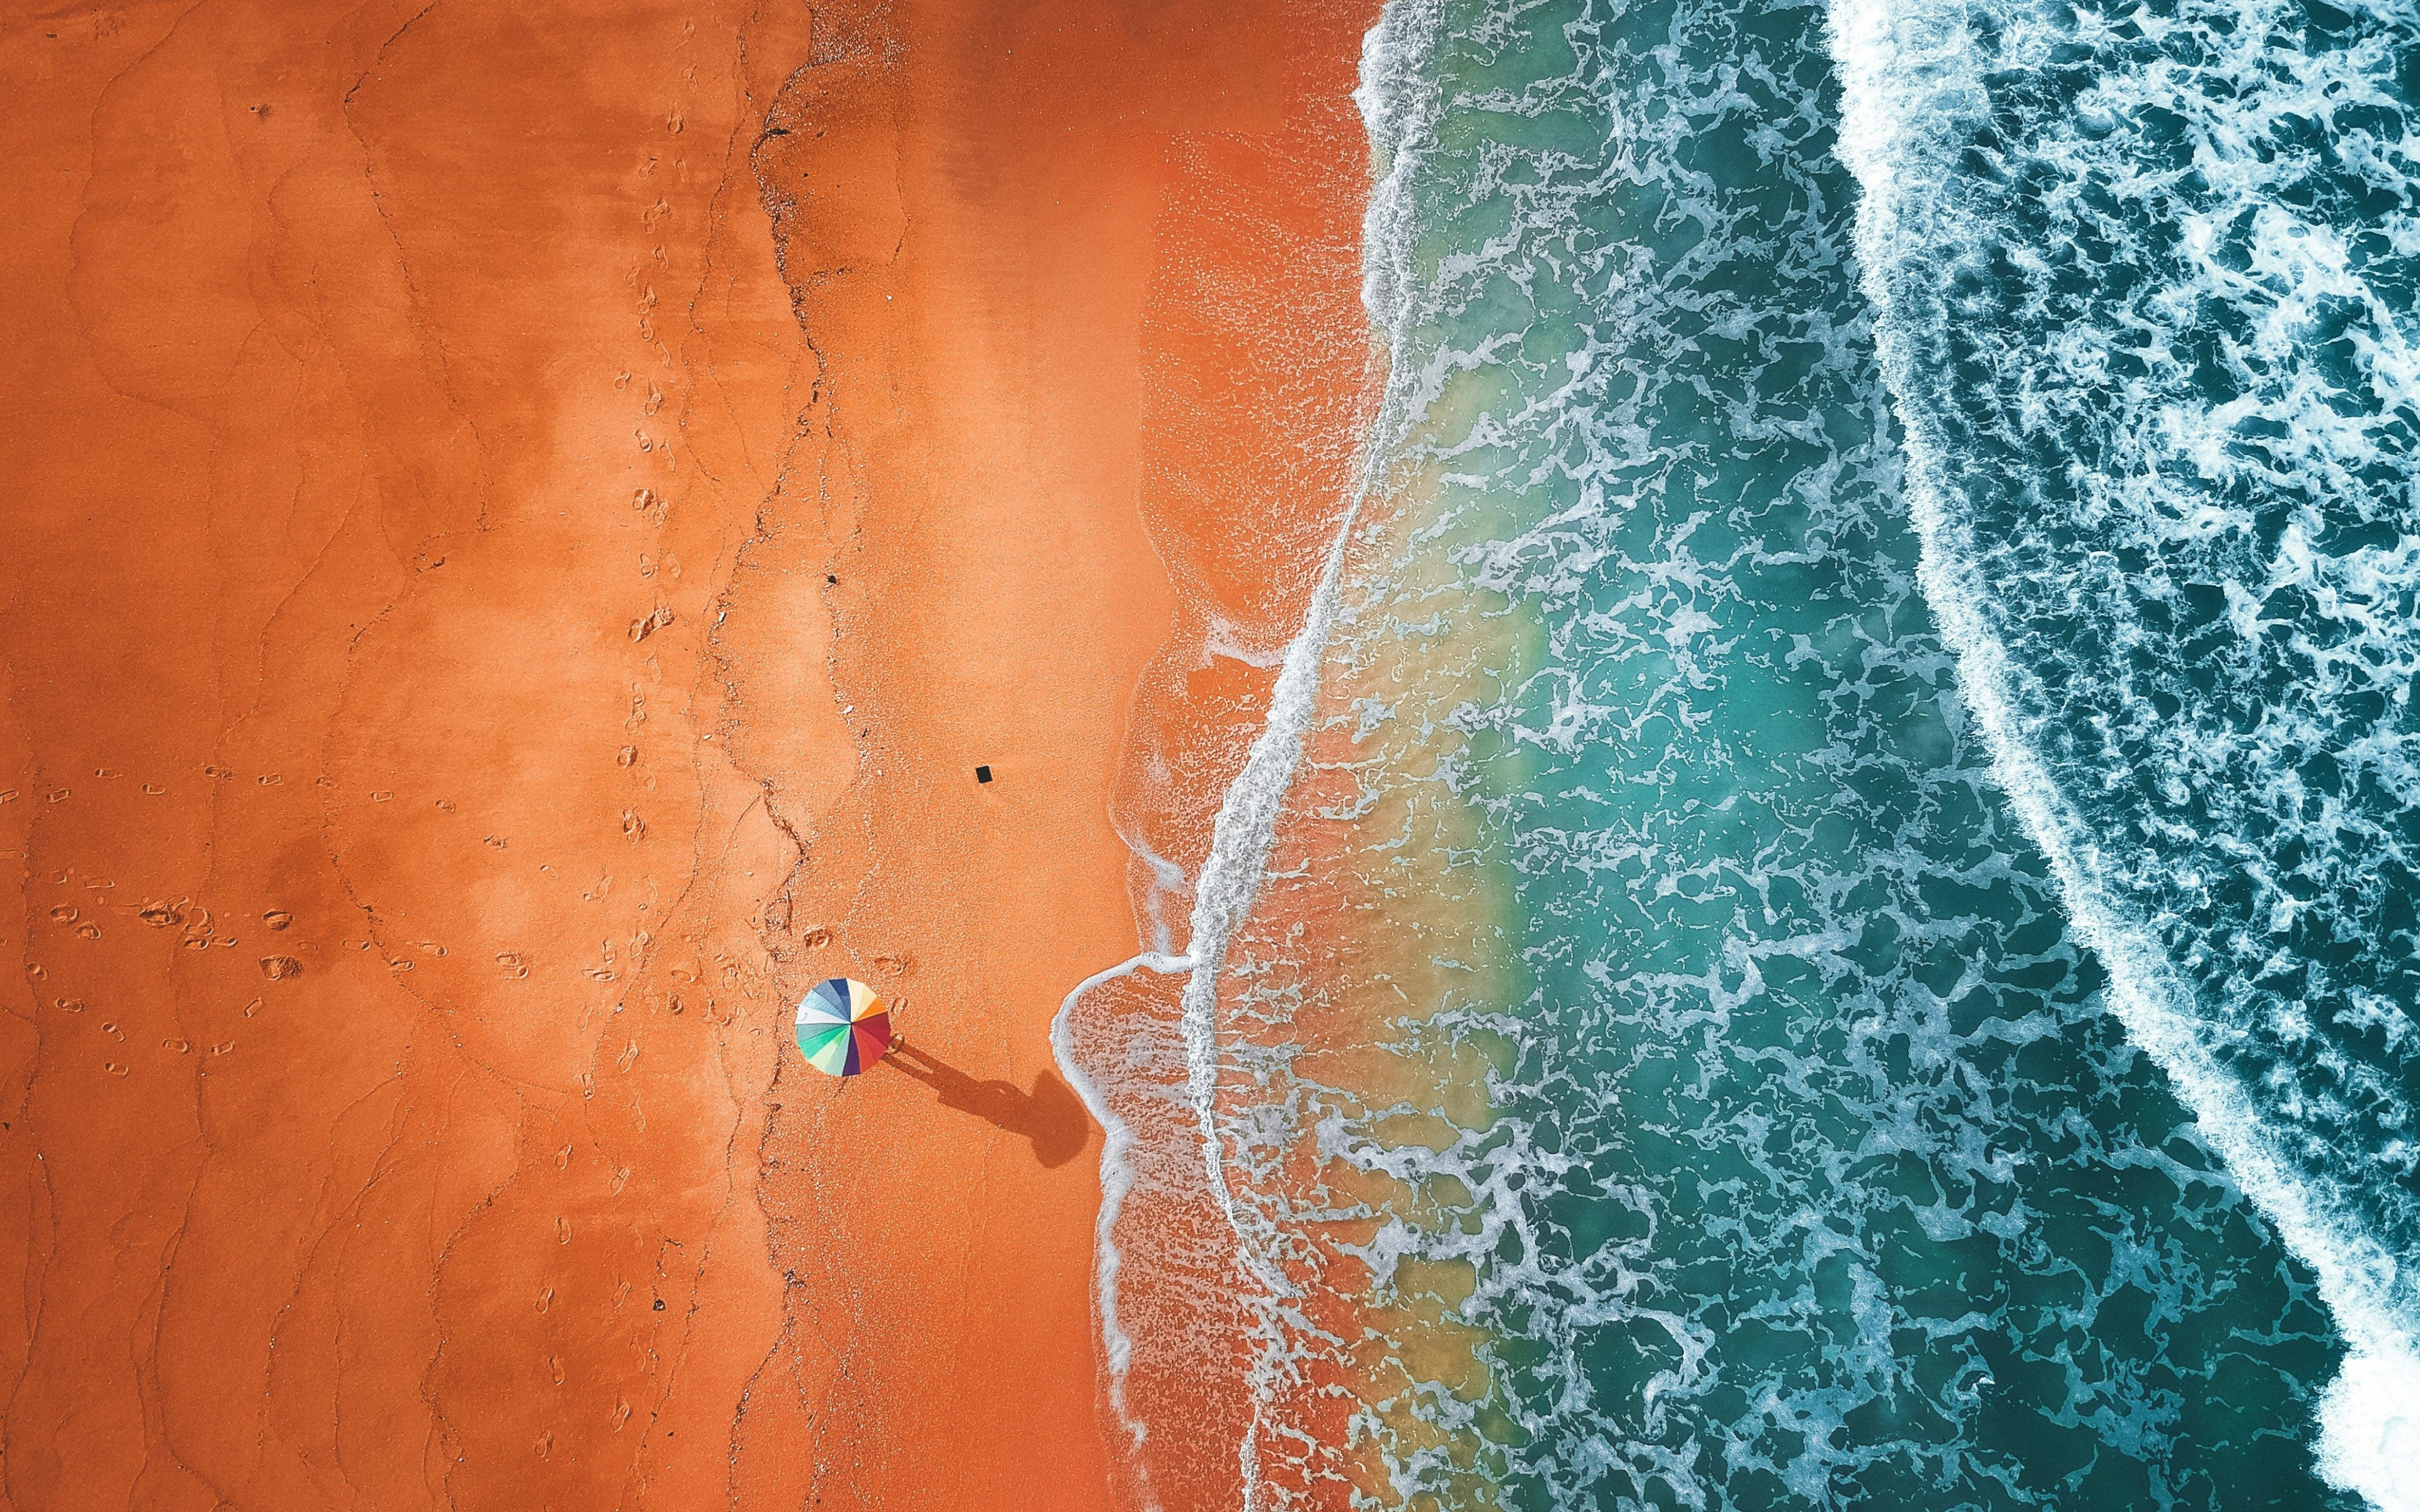 Download wallpaper 3840x2400 beach, drone view, adorable sea-shore 4k  wallaper, 4k ultra hd 16:10 wallpaper, 3840x2400 hd background, 23570